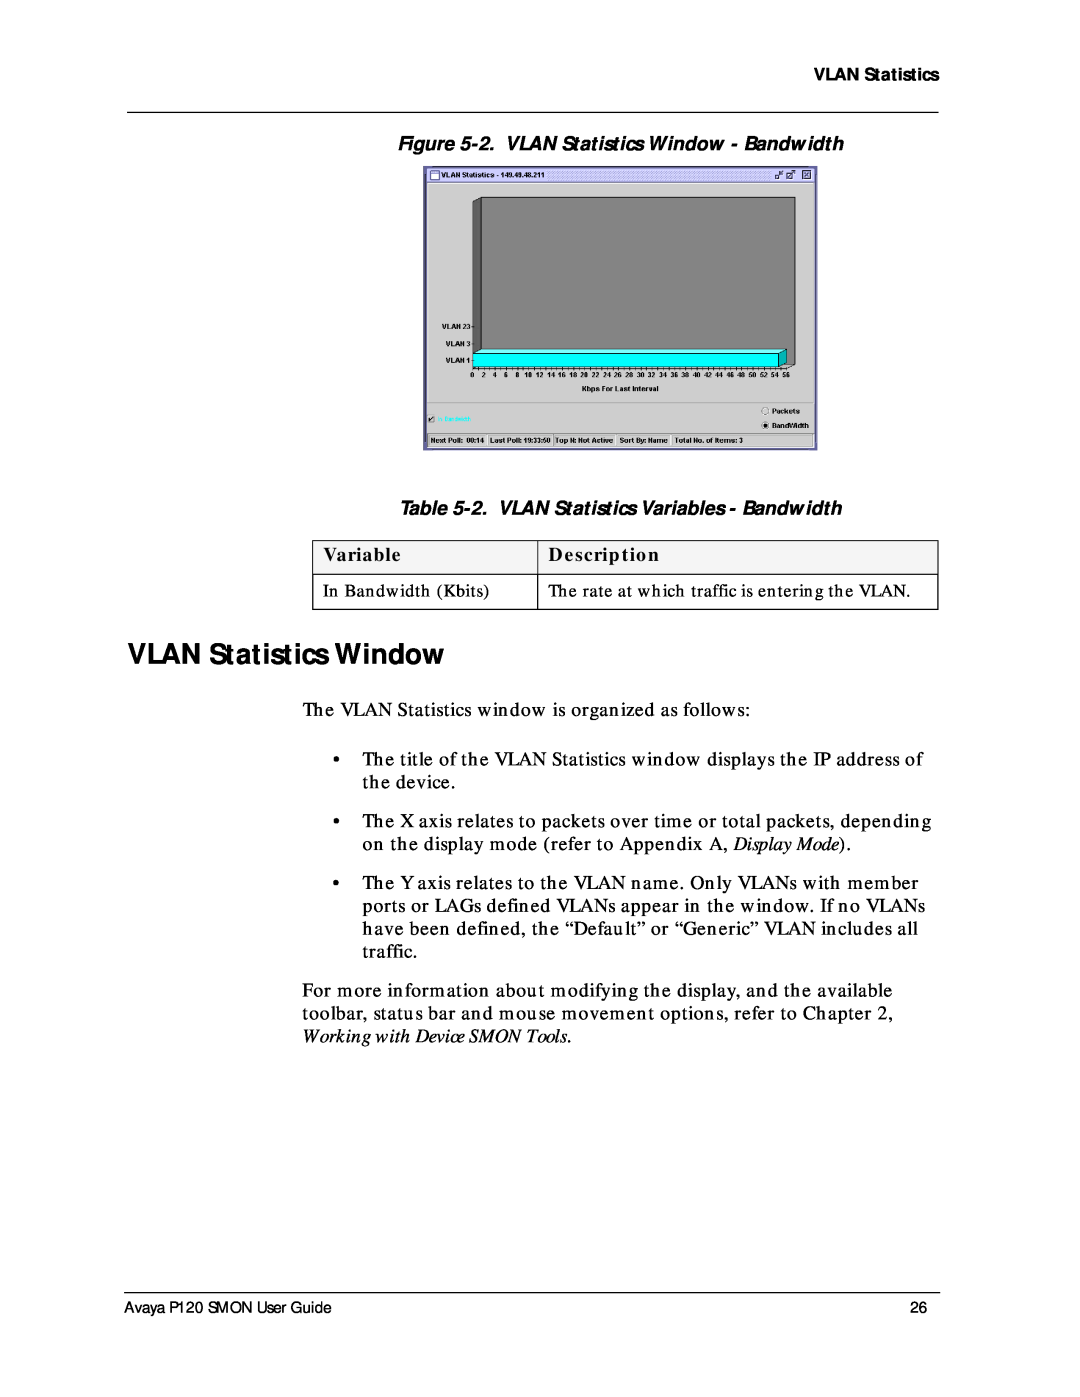 Avaya P120 SMON manual 2. VLAN Statistics Window - Bandwidth, 2. VLAN Statistics Variables - Bandwidth 